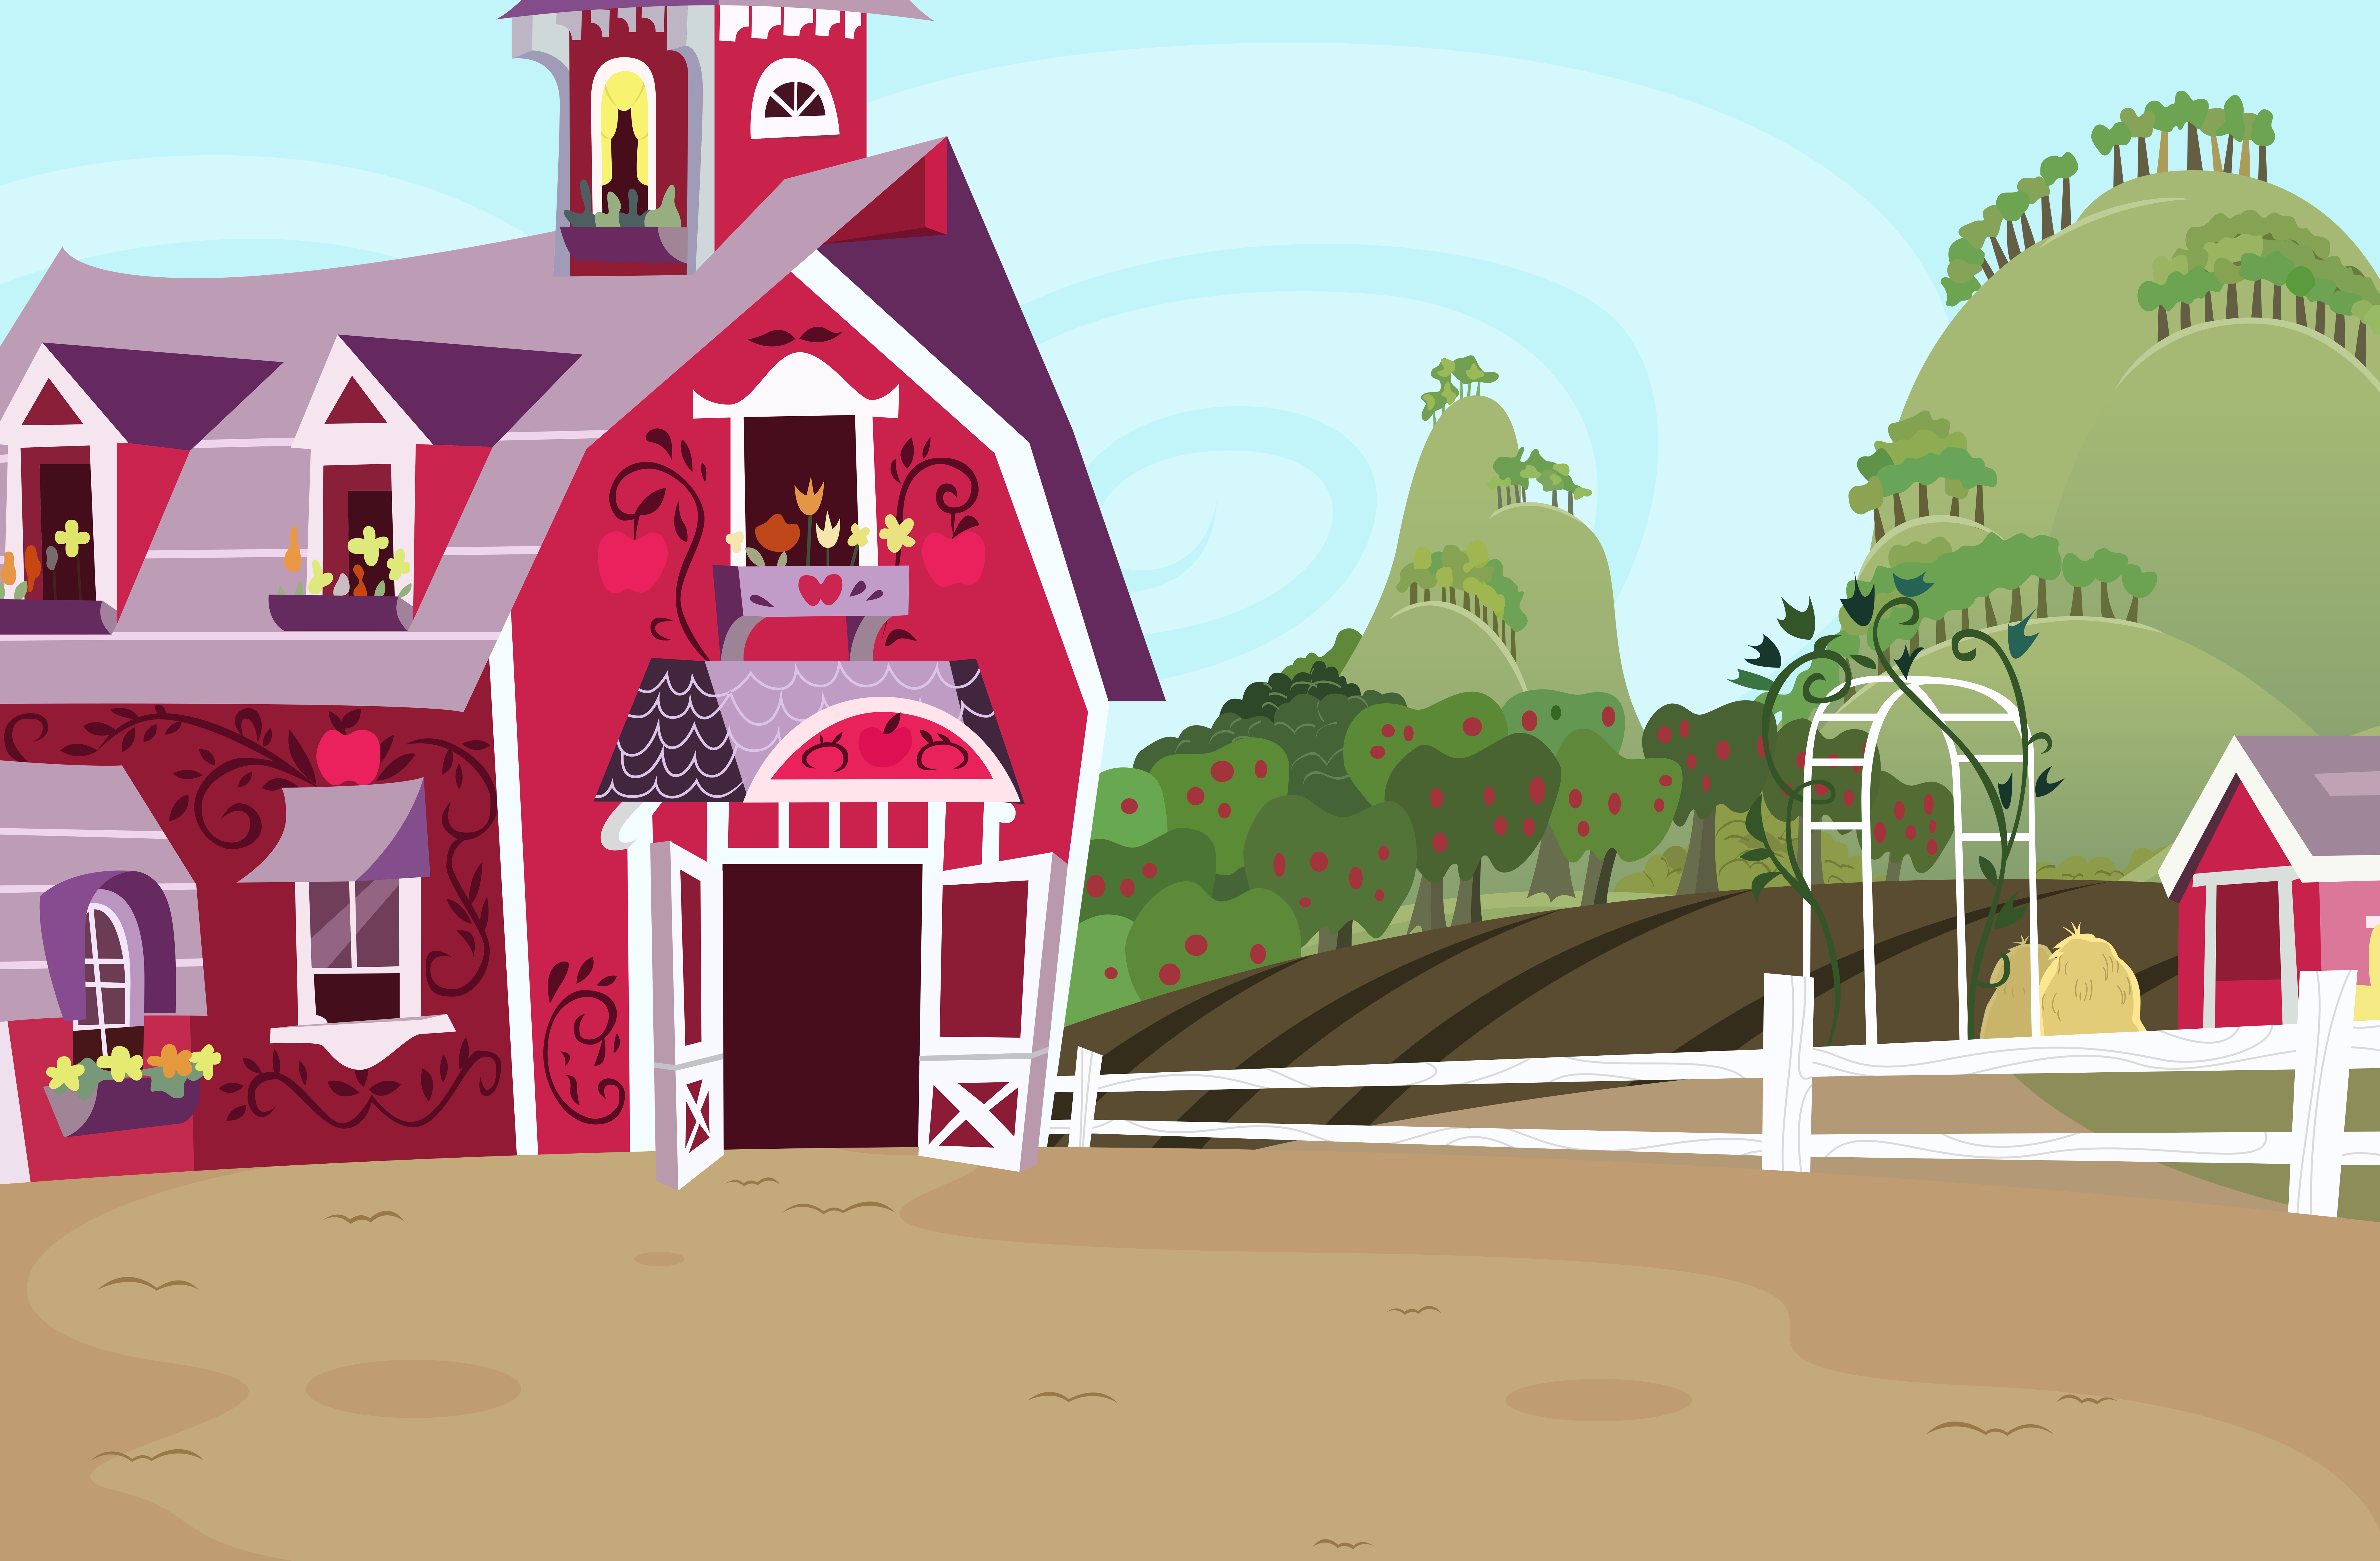 Barn Background